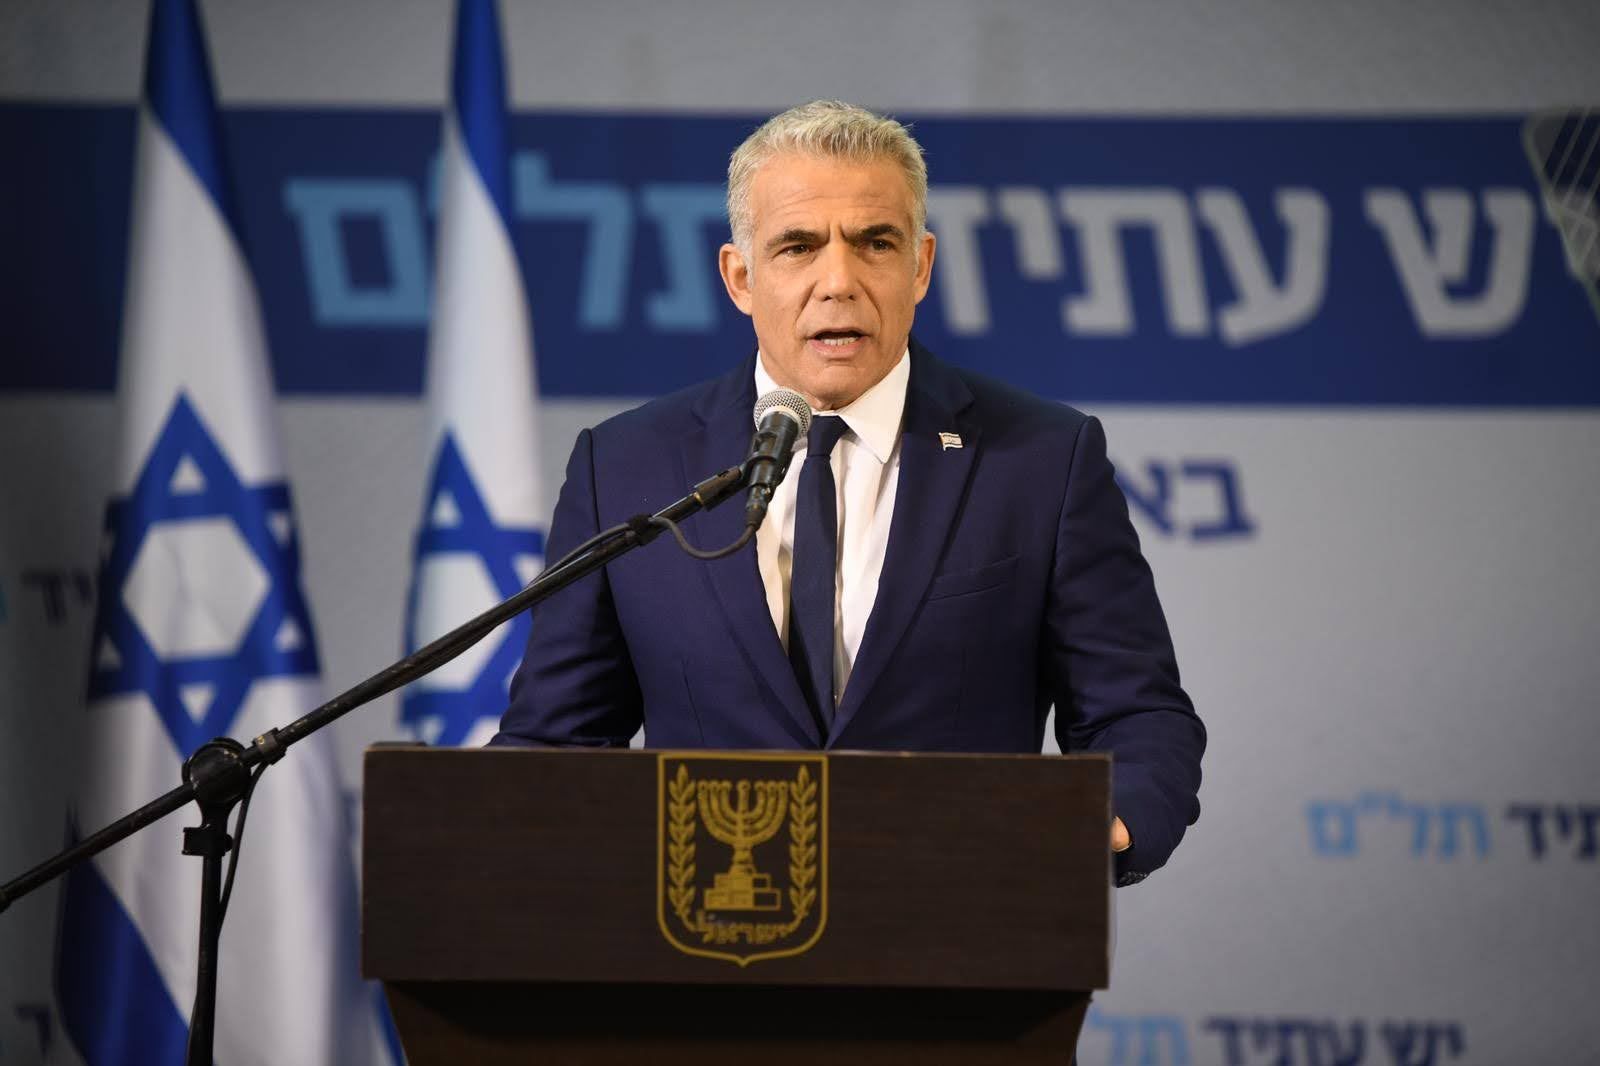 Yair Lapid takes office as Israeli PM